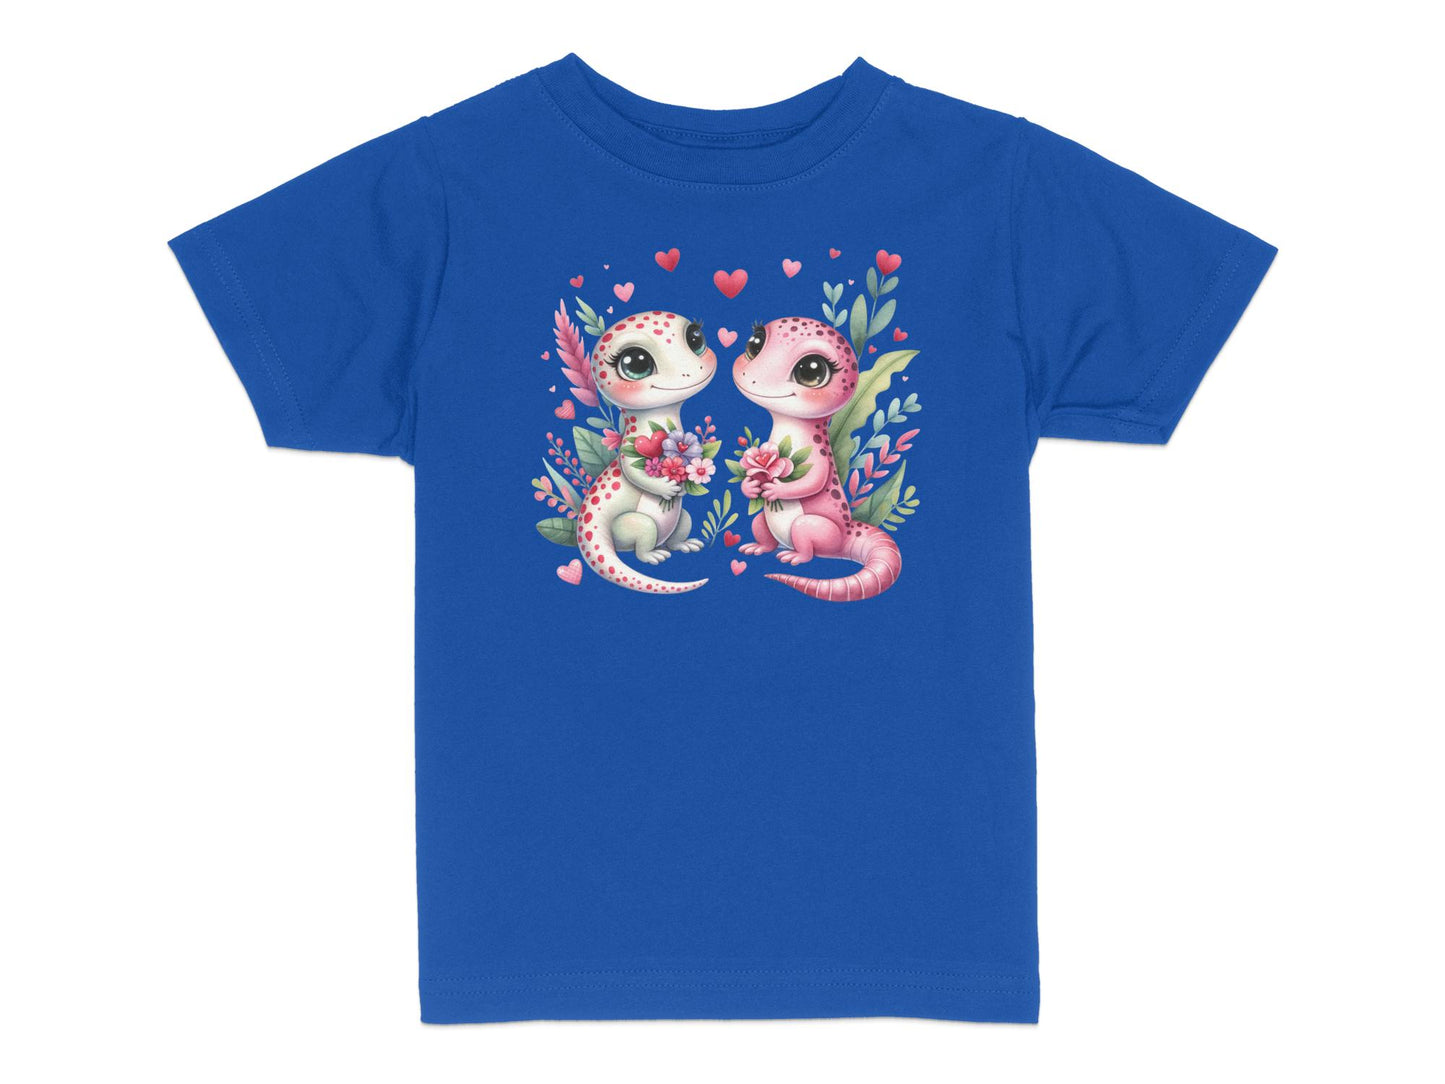 Adorable Lizard Cartoon T-shirt for Toddlers, Cute Geckos Graphic Tee